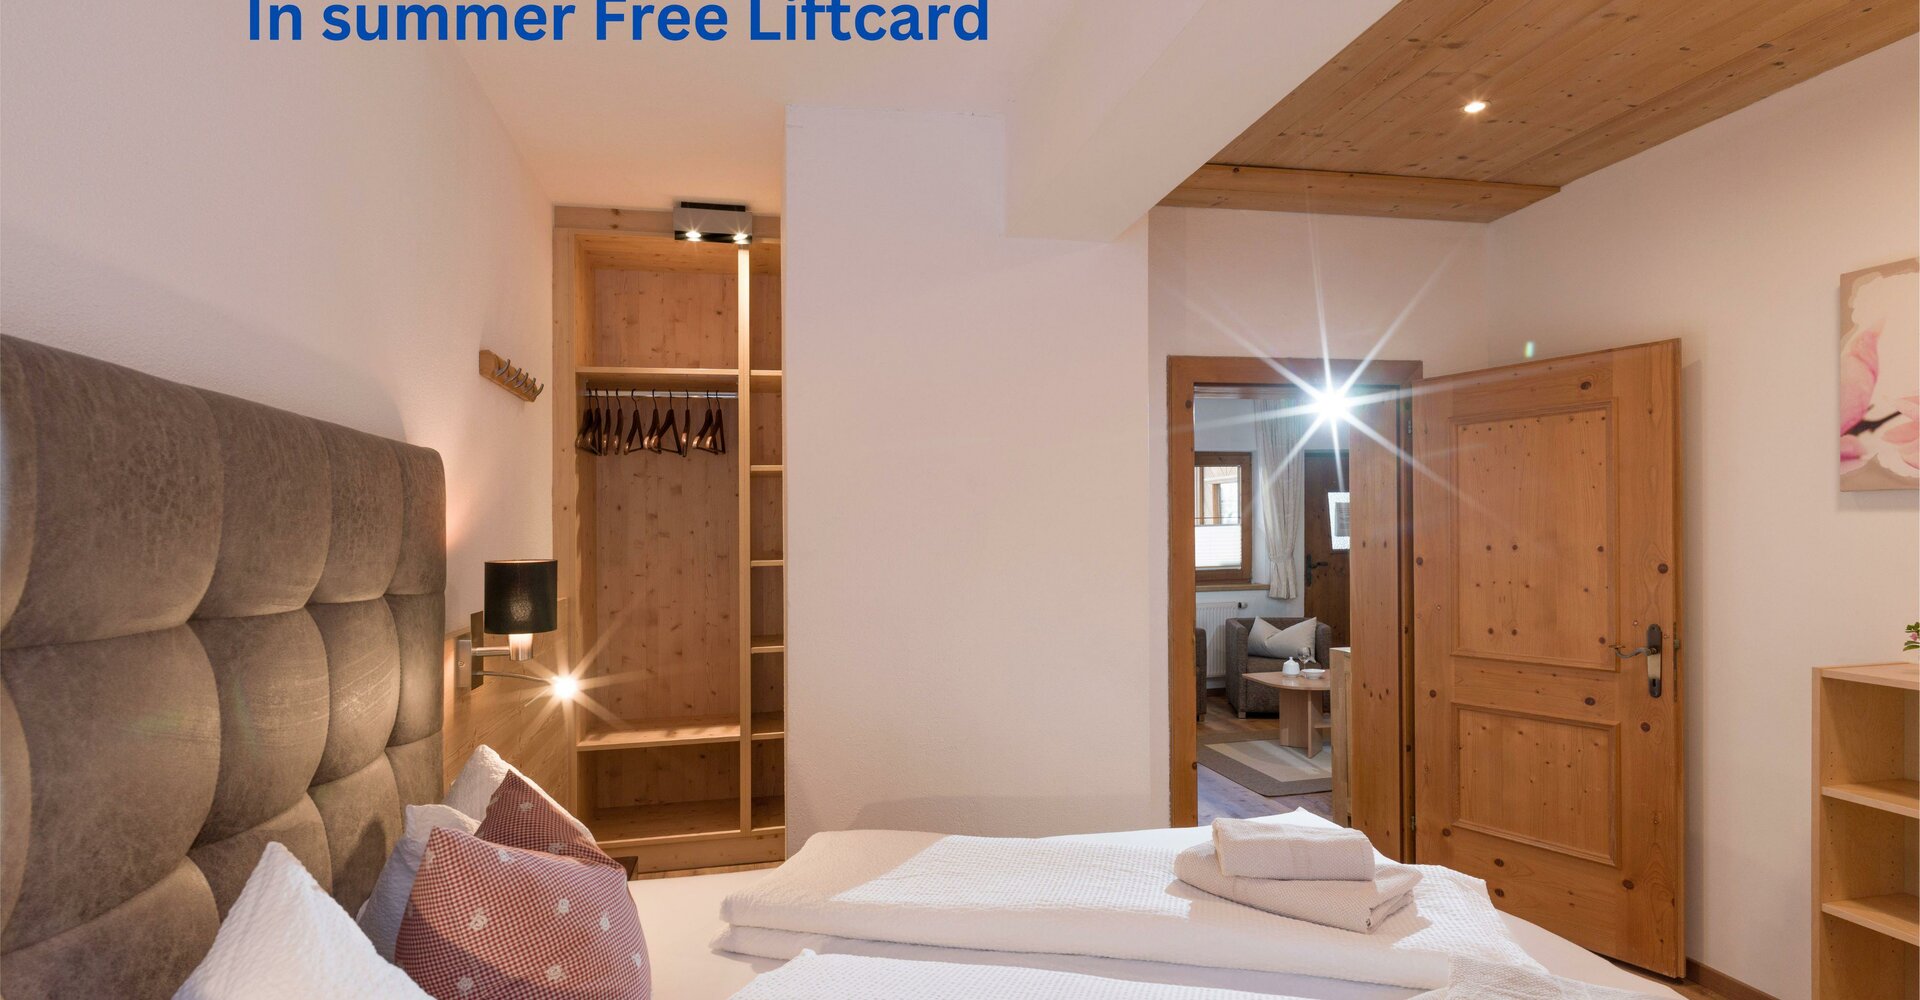 Freemountain-Inclusive-In-summer-Free-Liftcard-kle.jpg